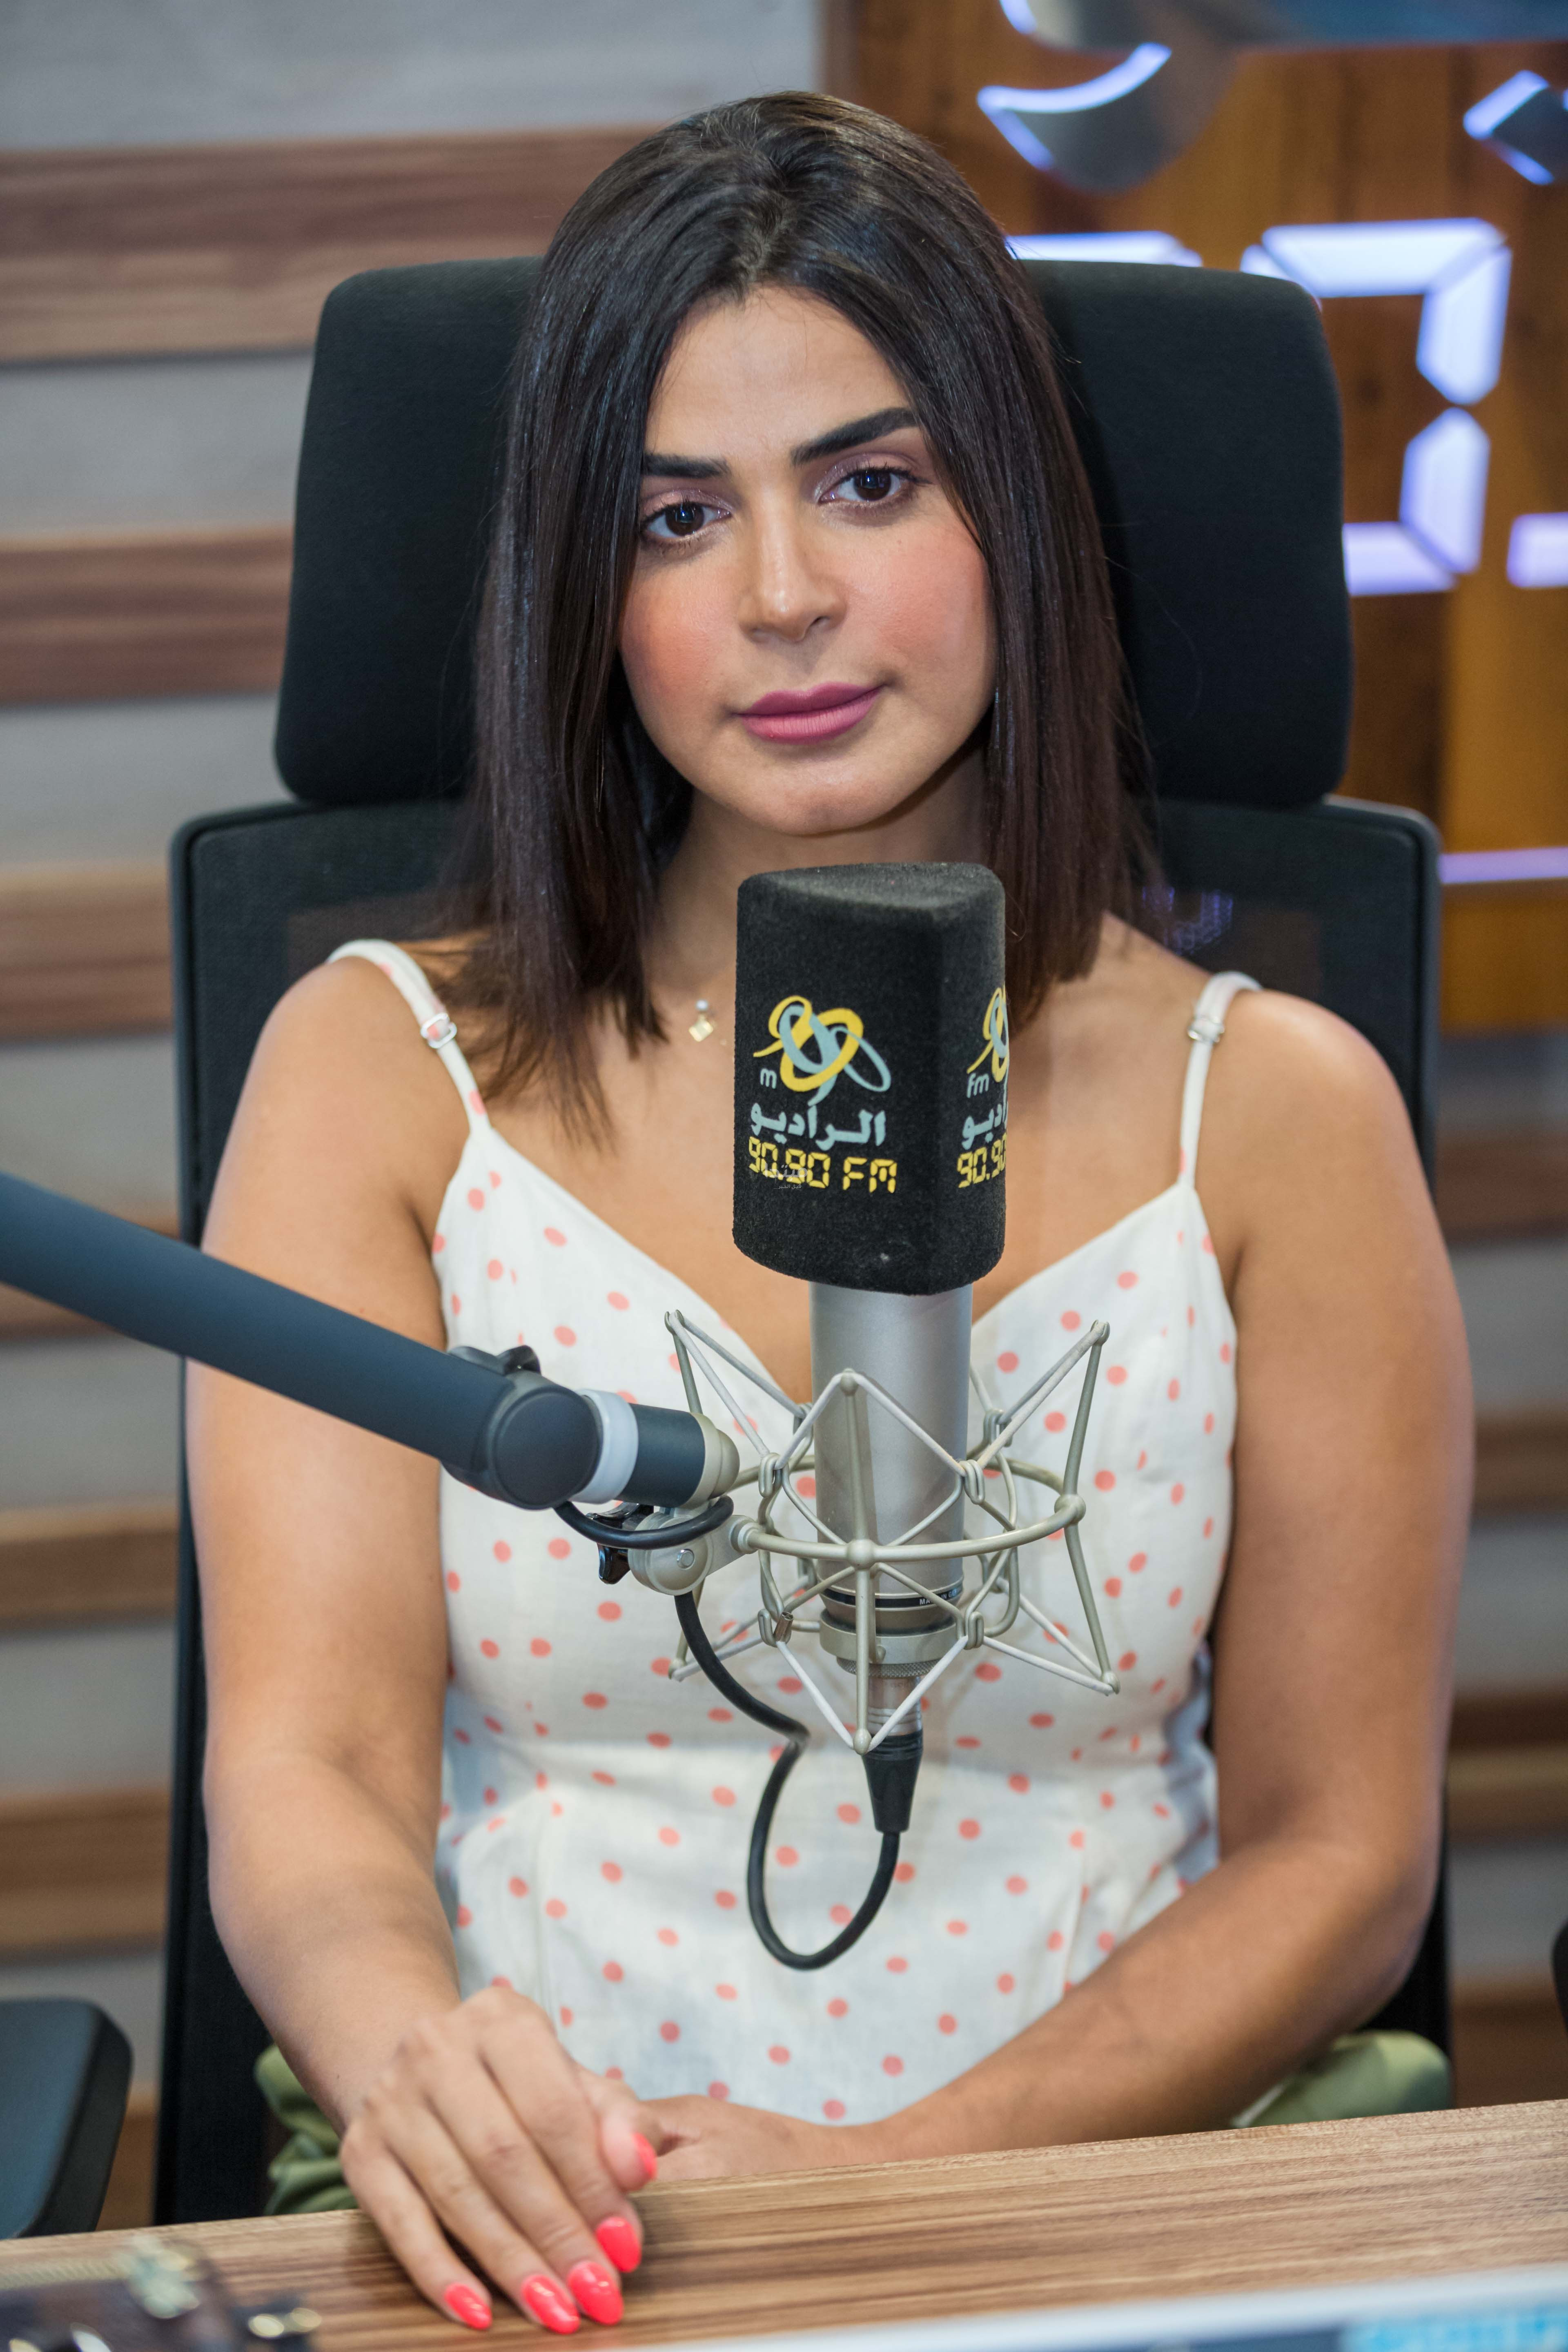 رانيا منصور